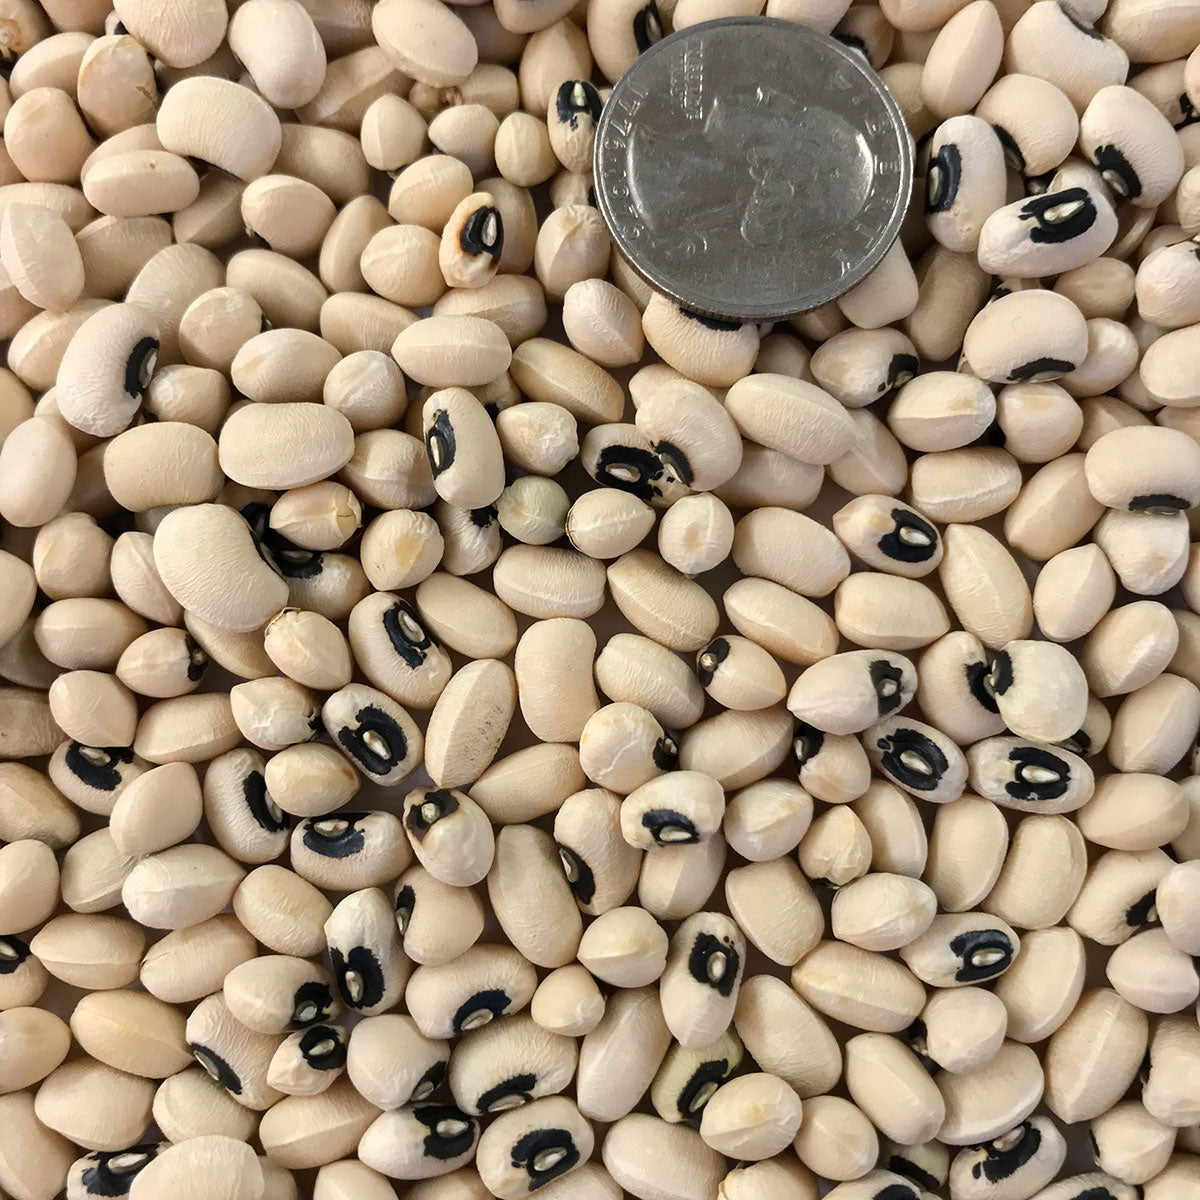 California Blackeye Cowpea Seeds (Southern Bean)